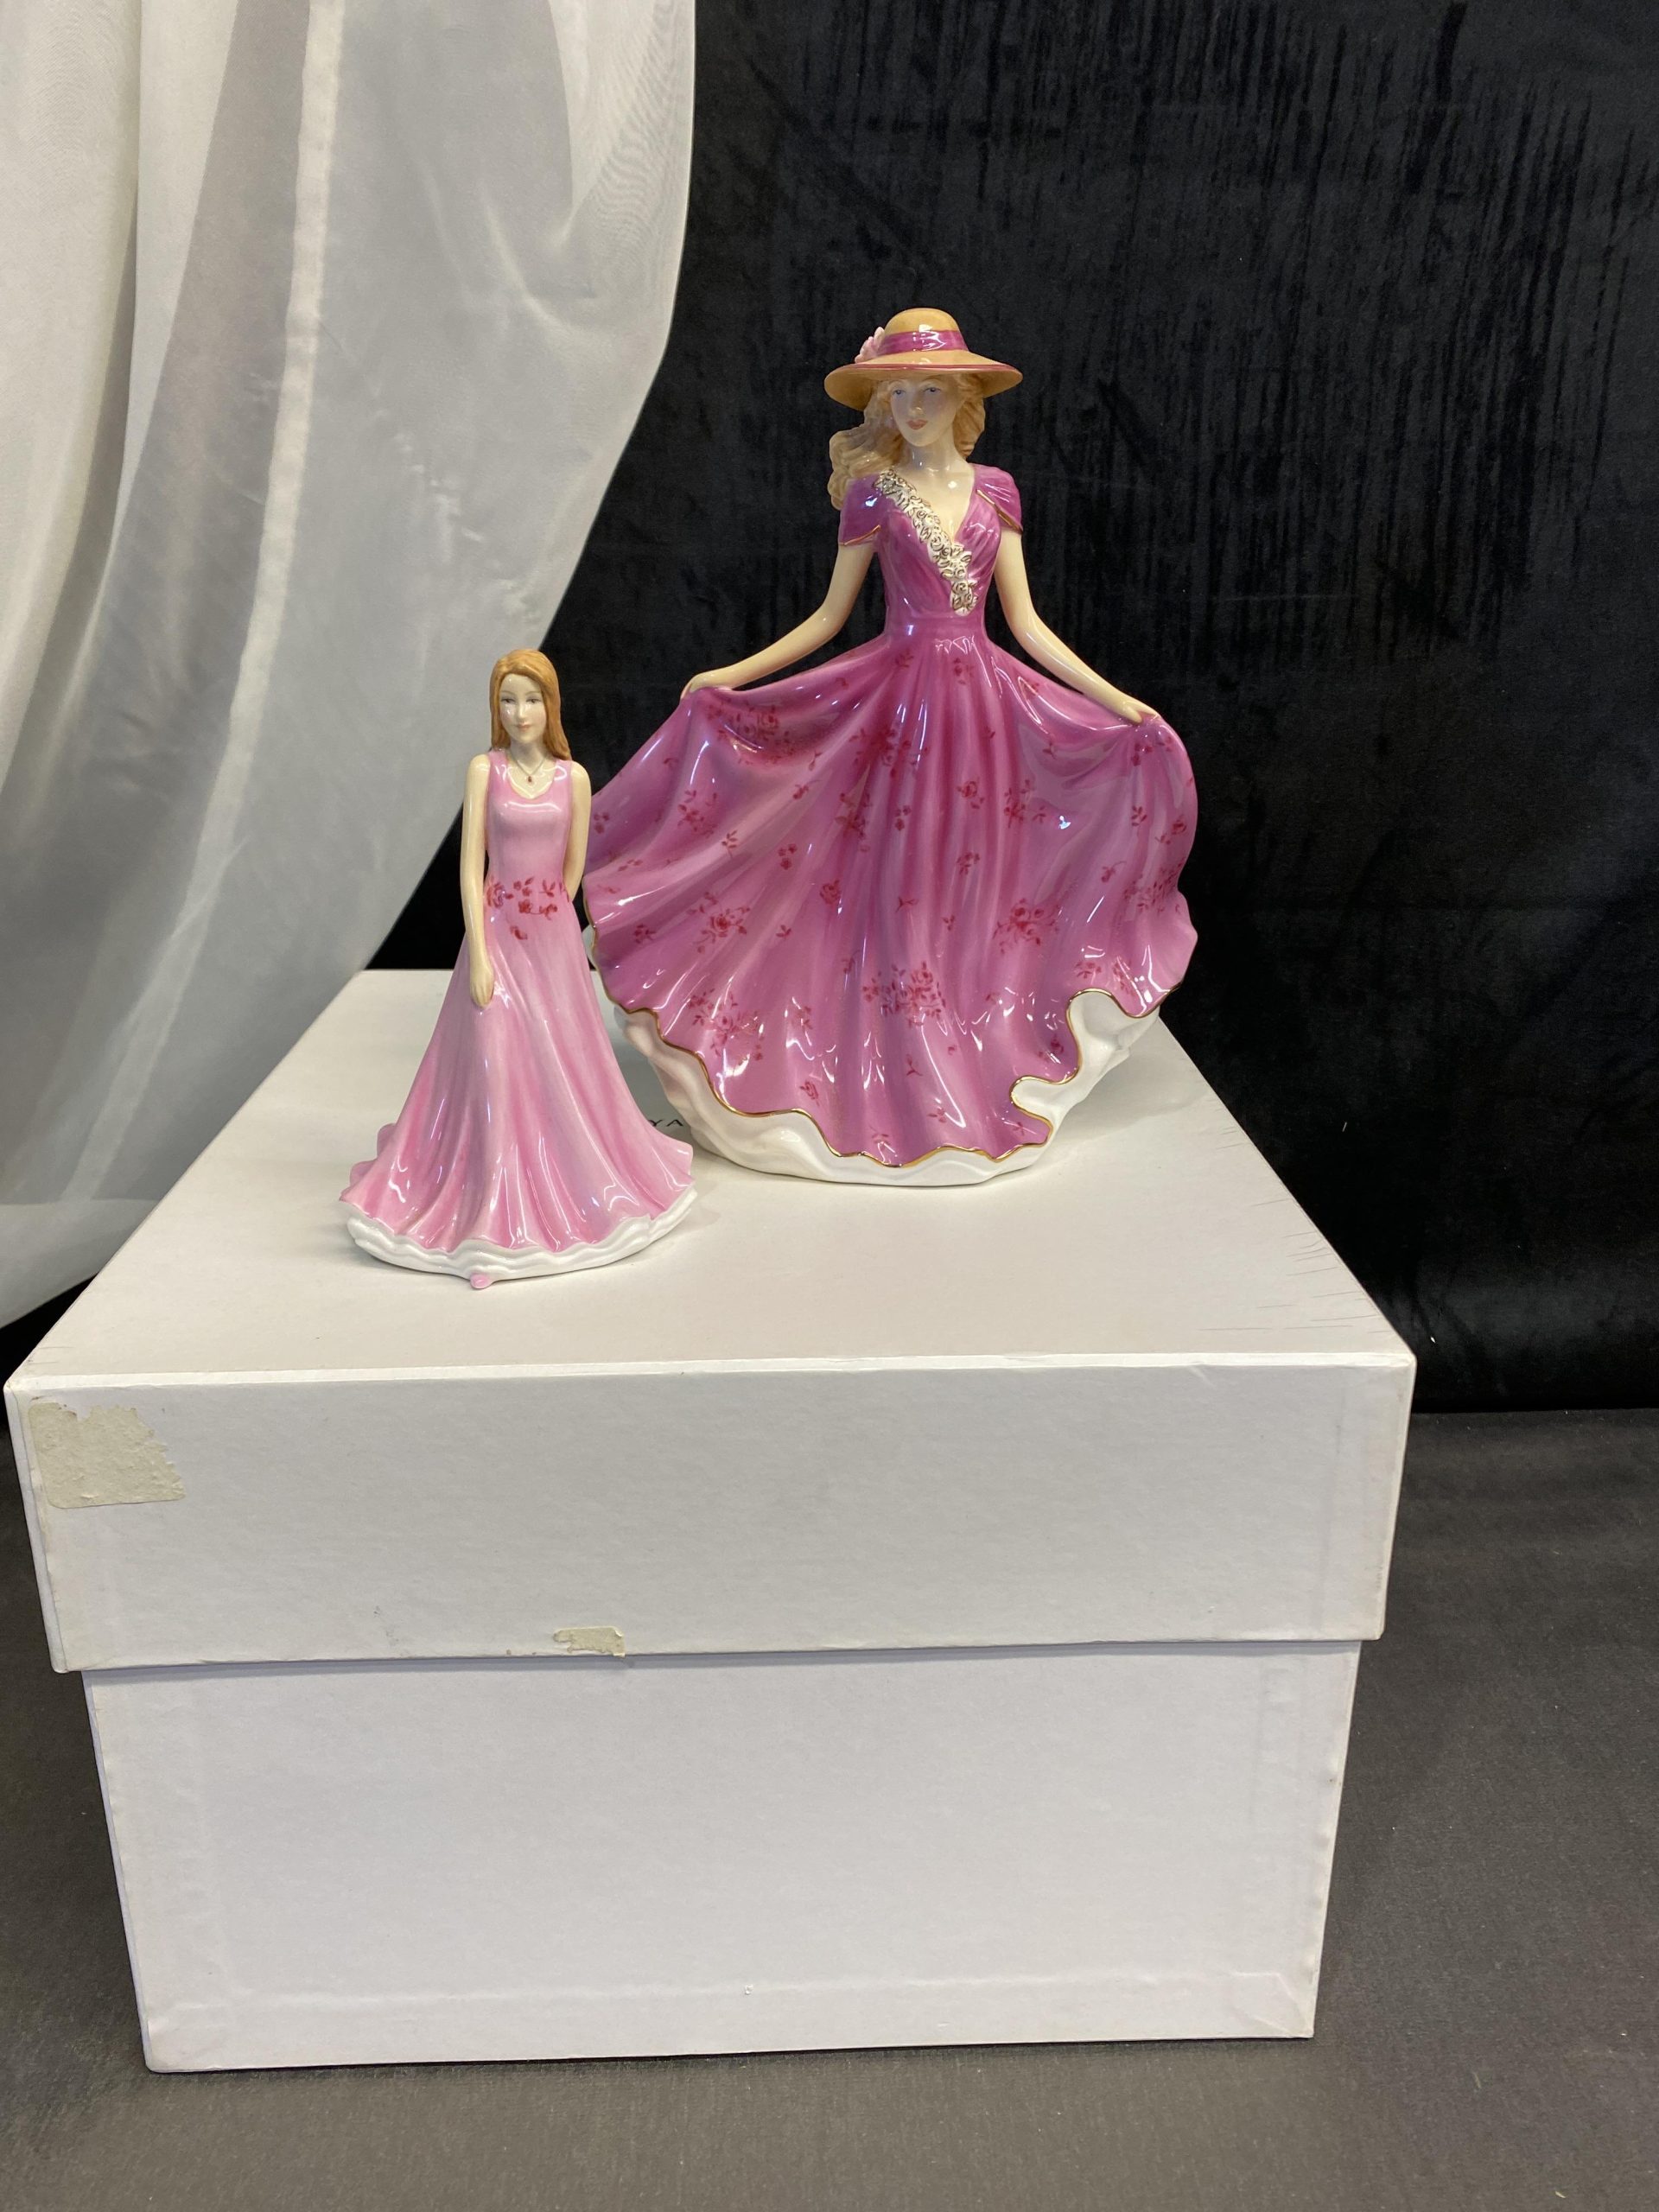 Set 2 Royal Doulton Figurines – Elizabeth & Liz